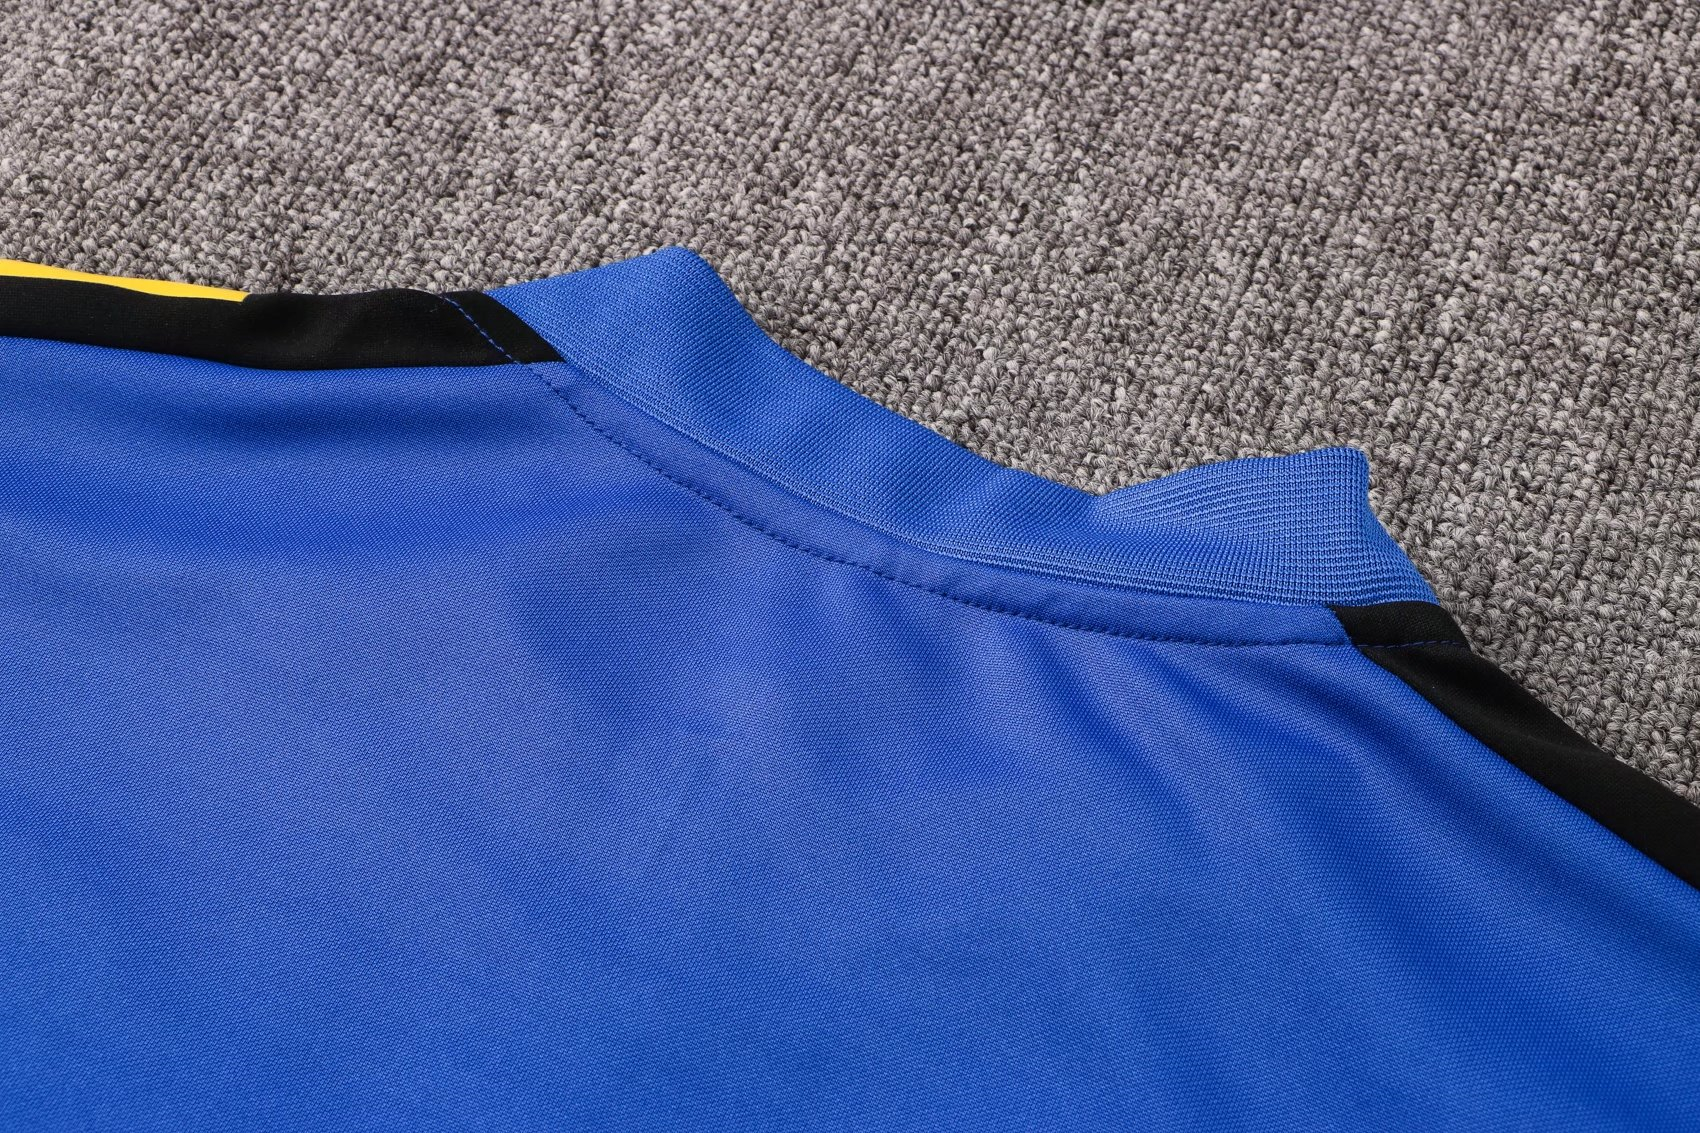 Manchester United Soccer Traning Suit (Jacket + Pants) Blue Mens 2021/22